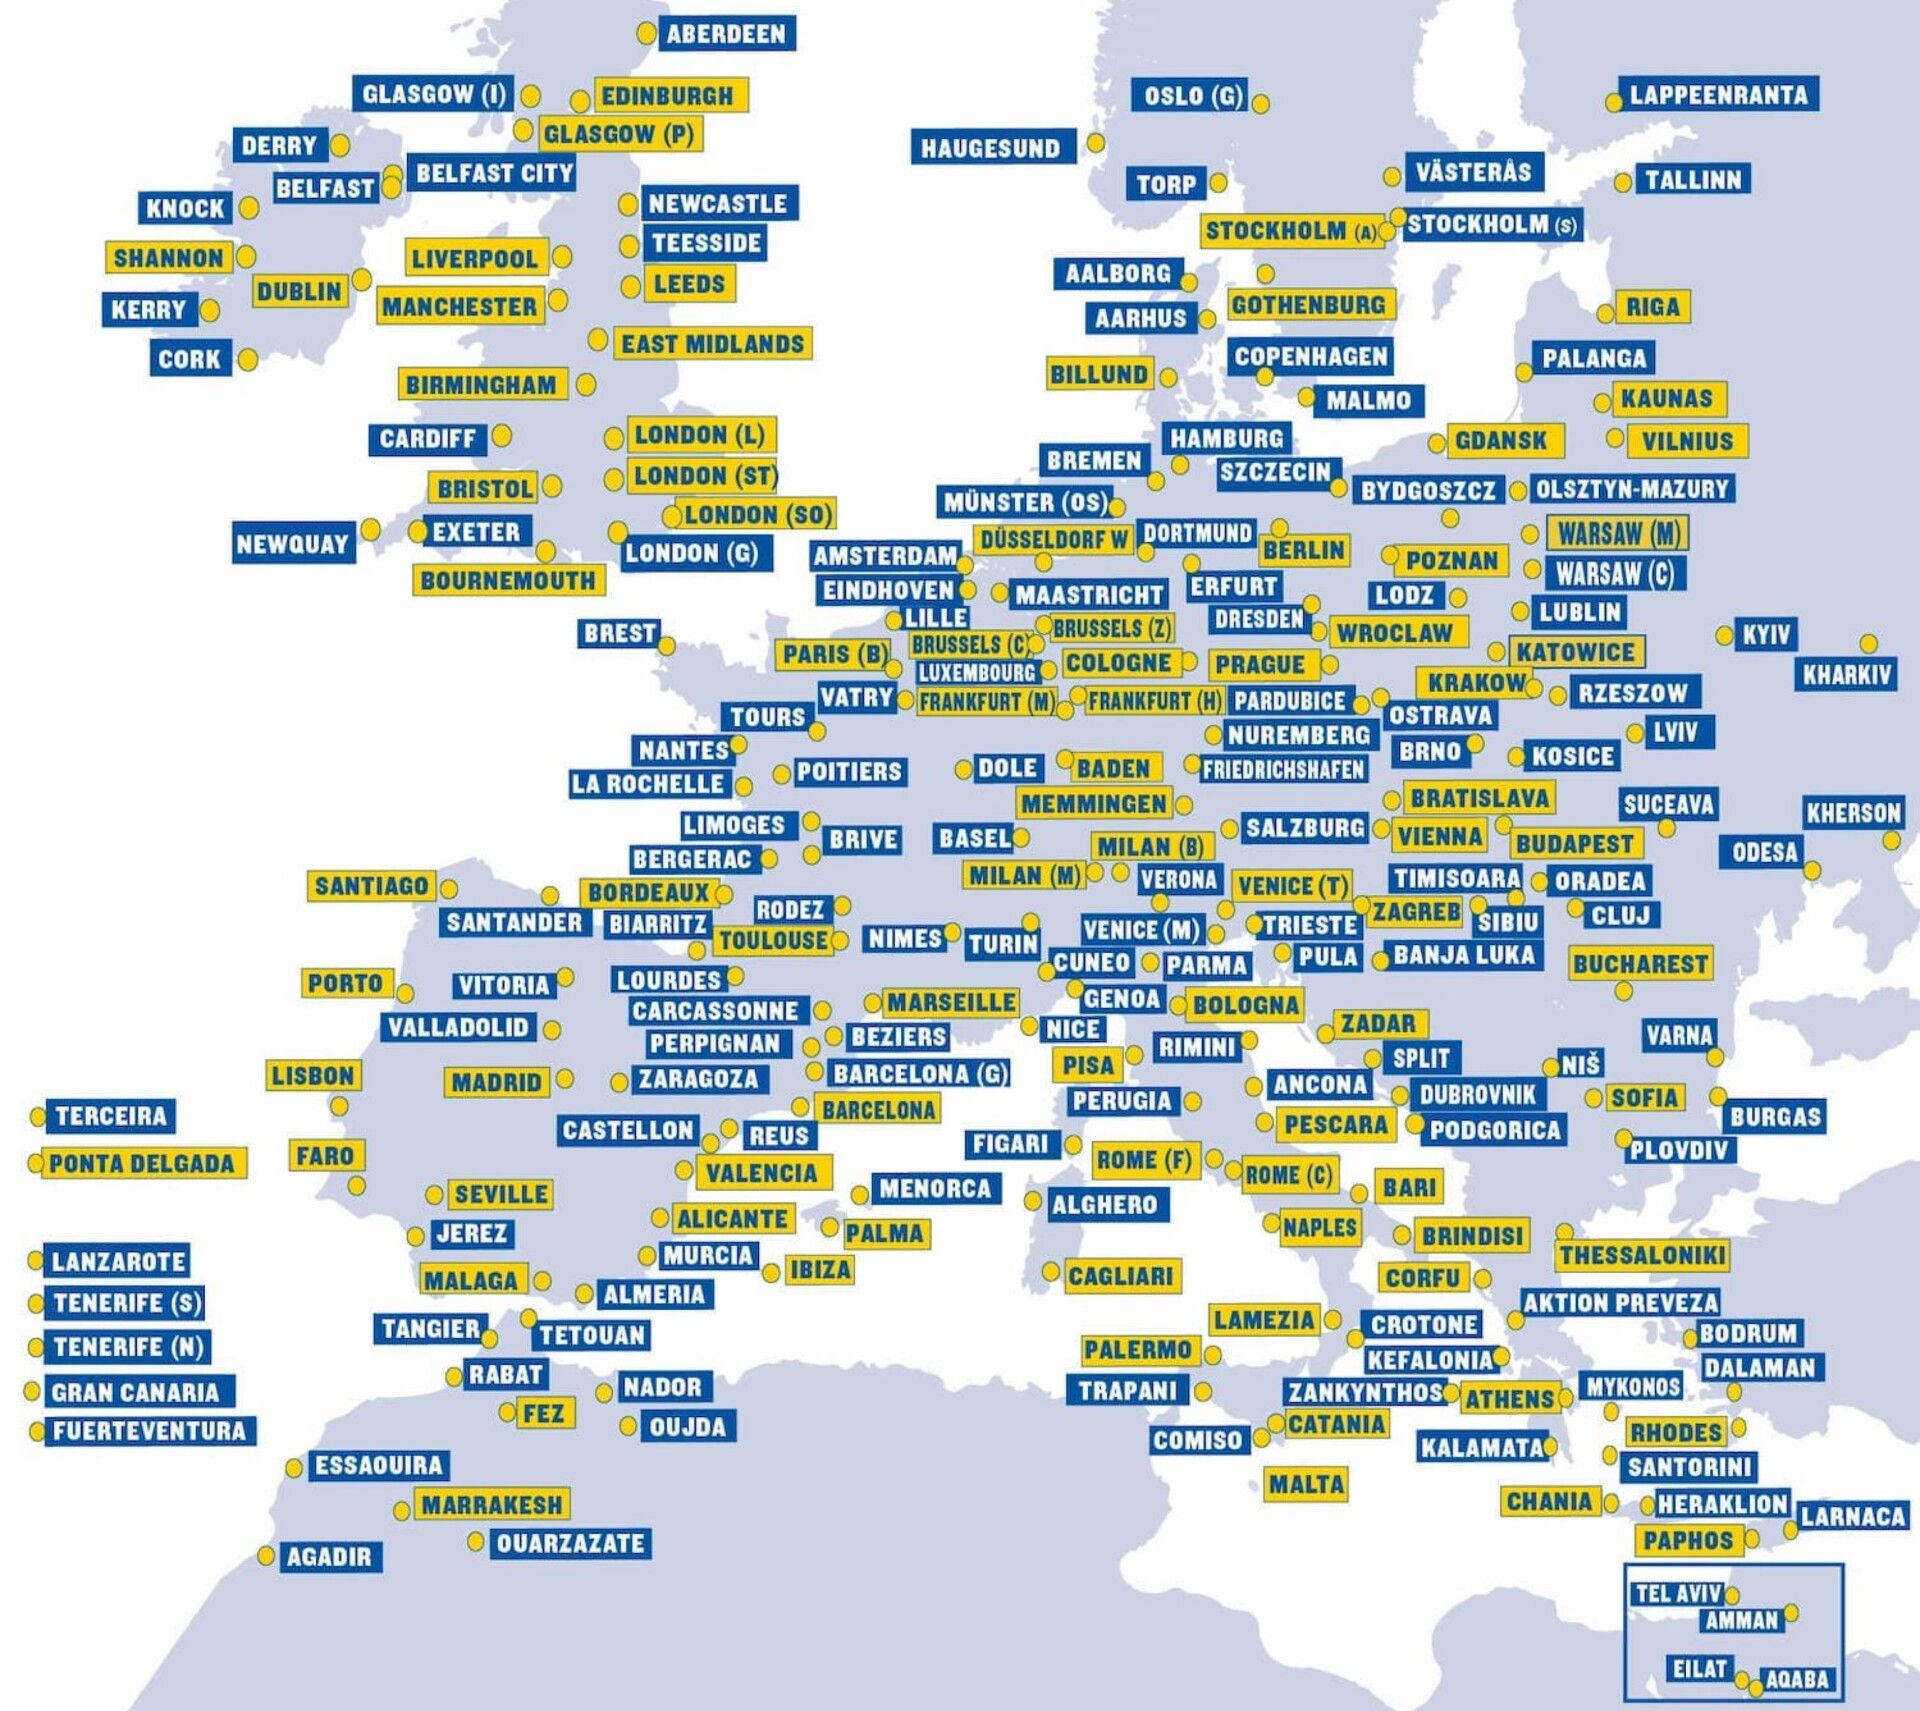 Ryanair's European route map.